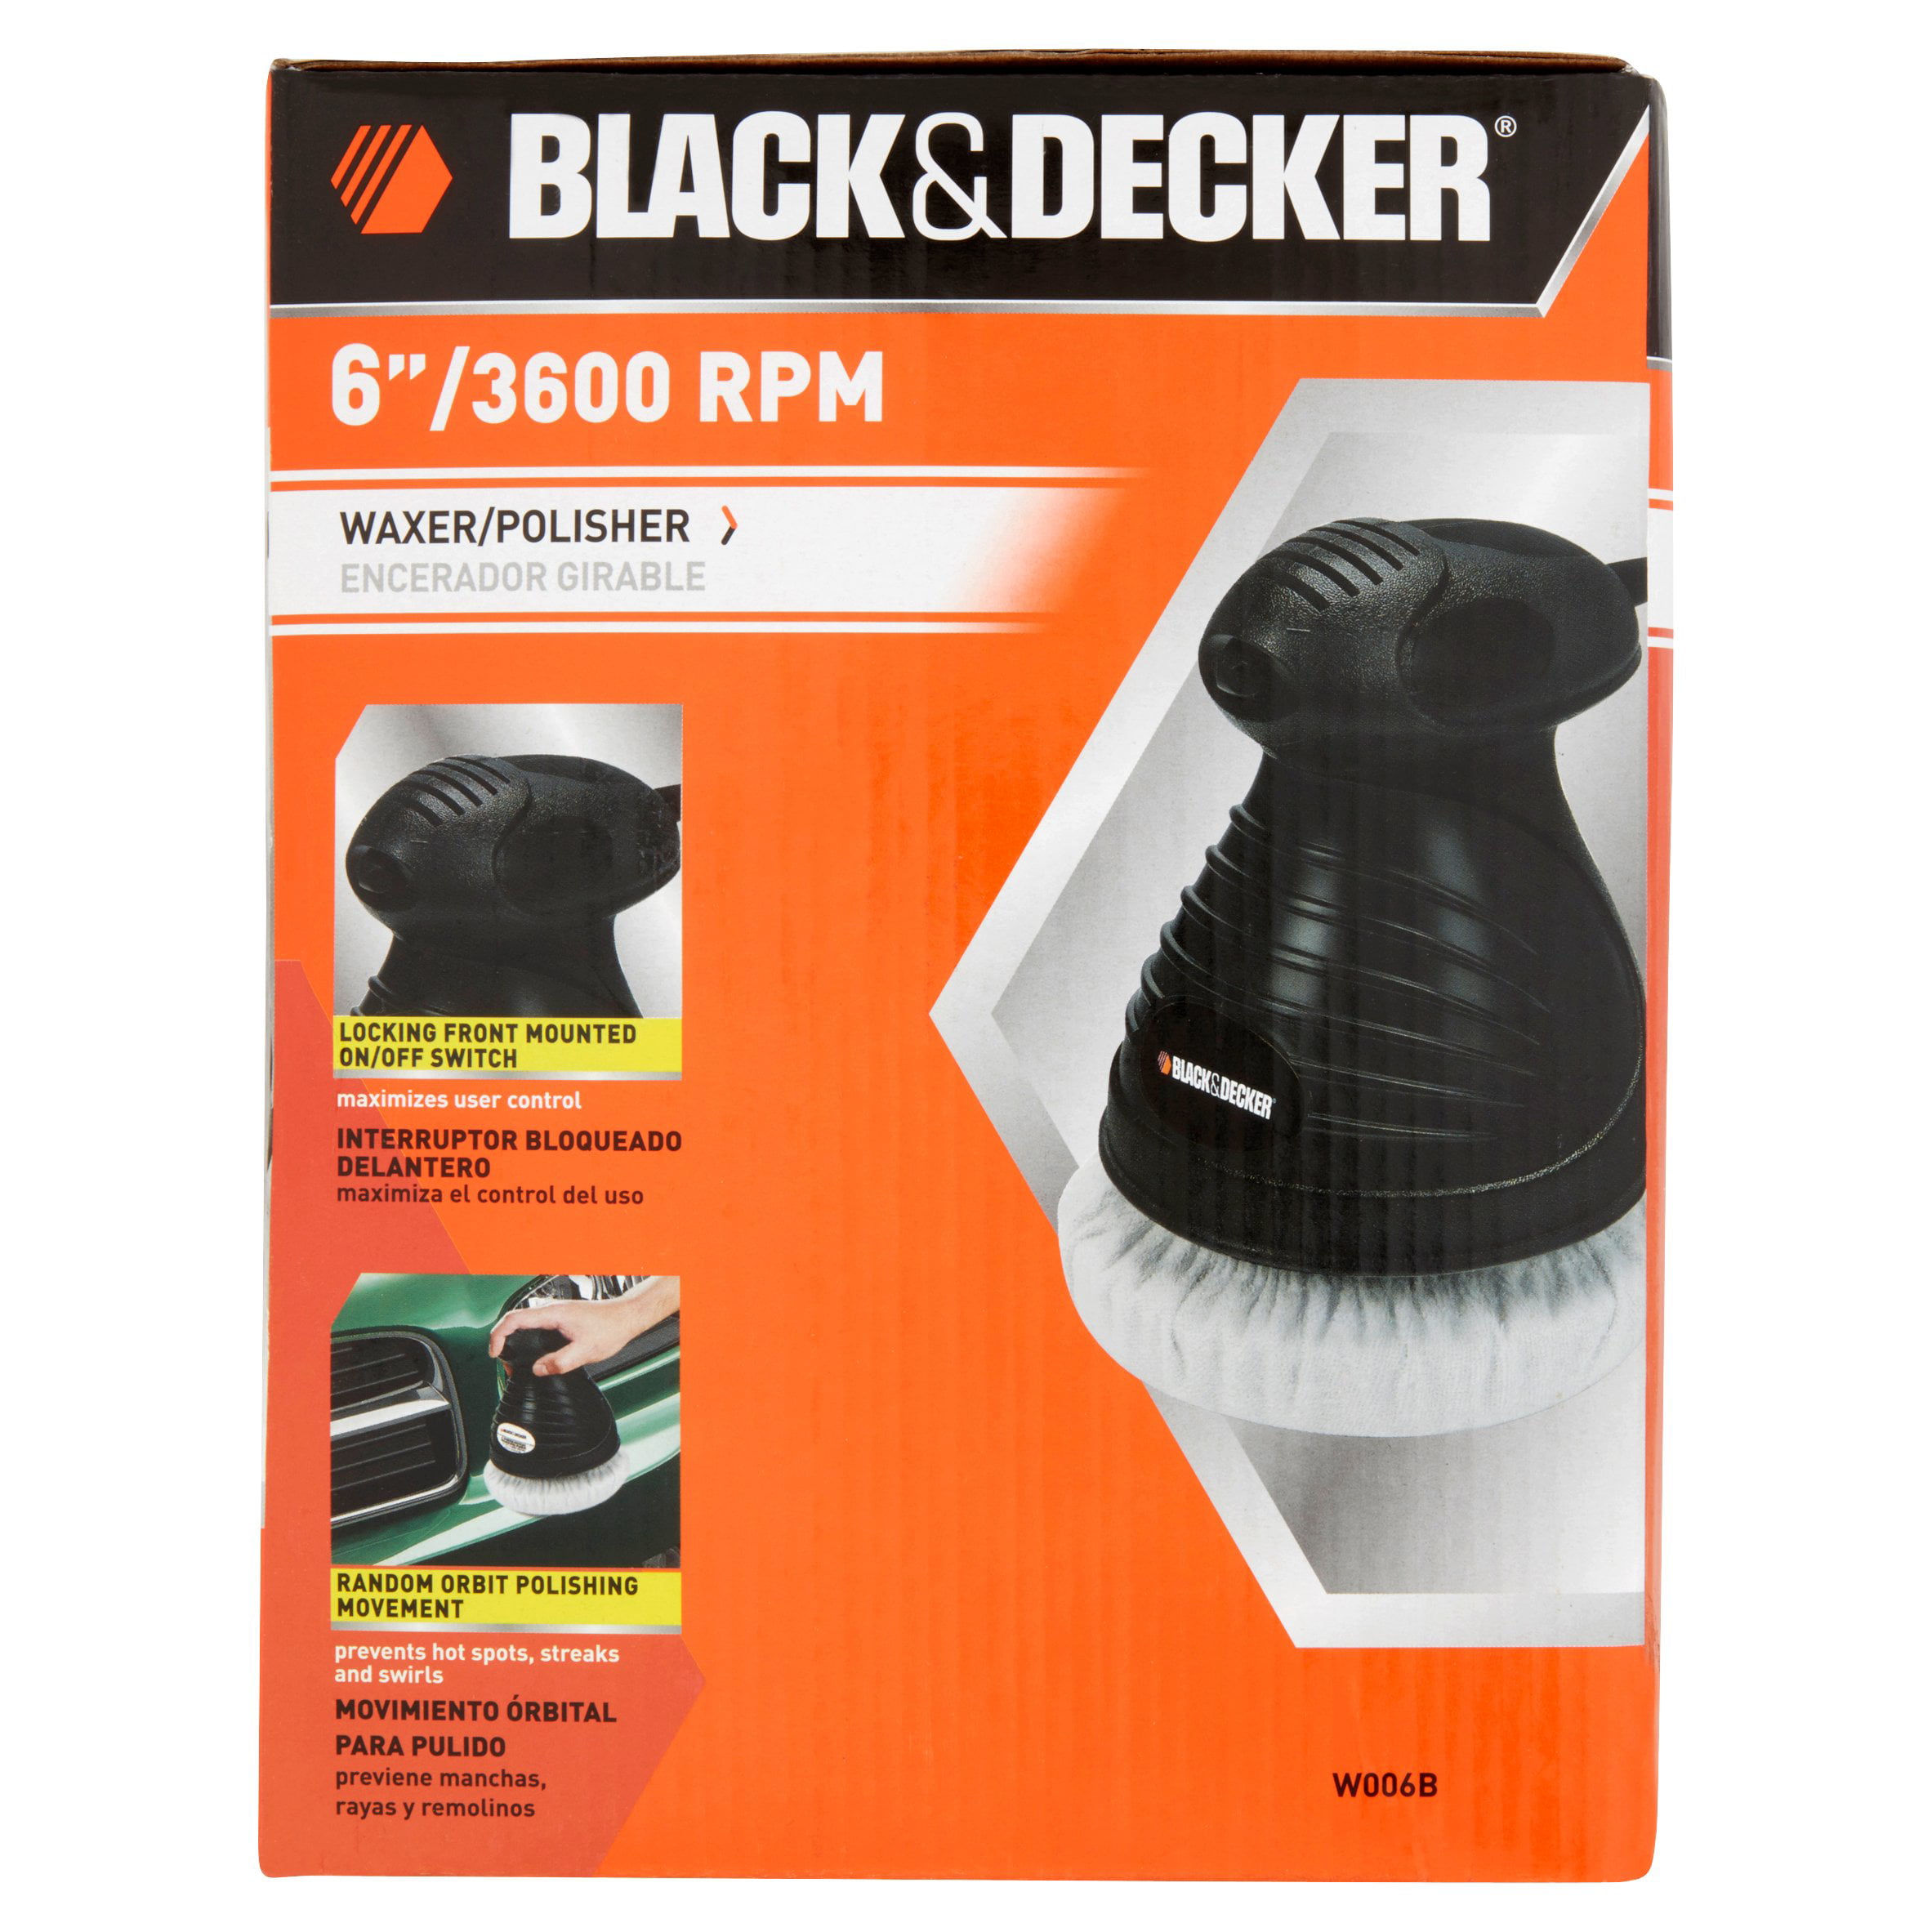 Black & Decker W007B - 7 Corded Fixed Speed Random Orbital Waxer and  Polisher (W007B) 